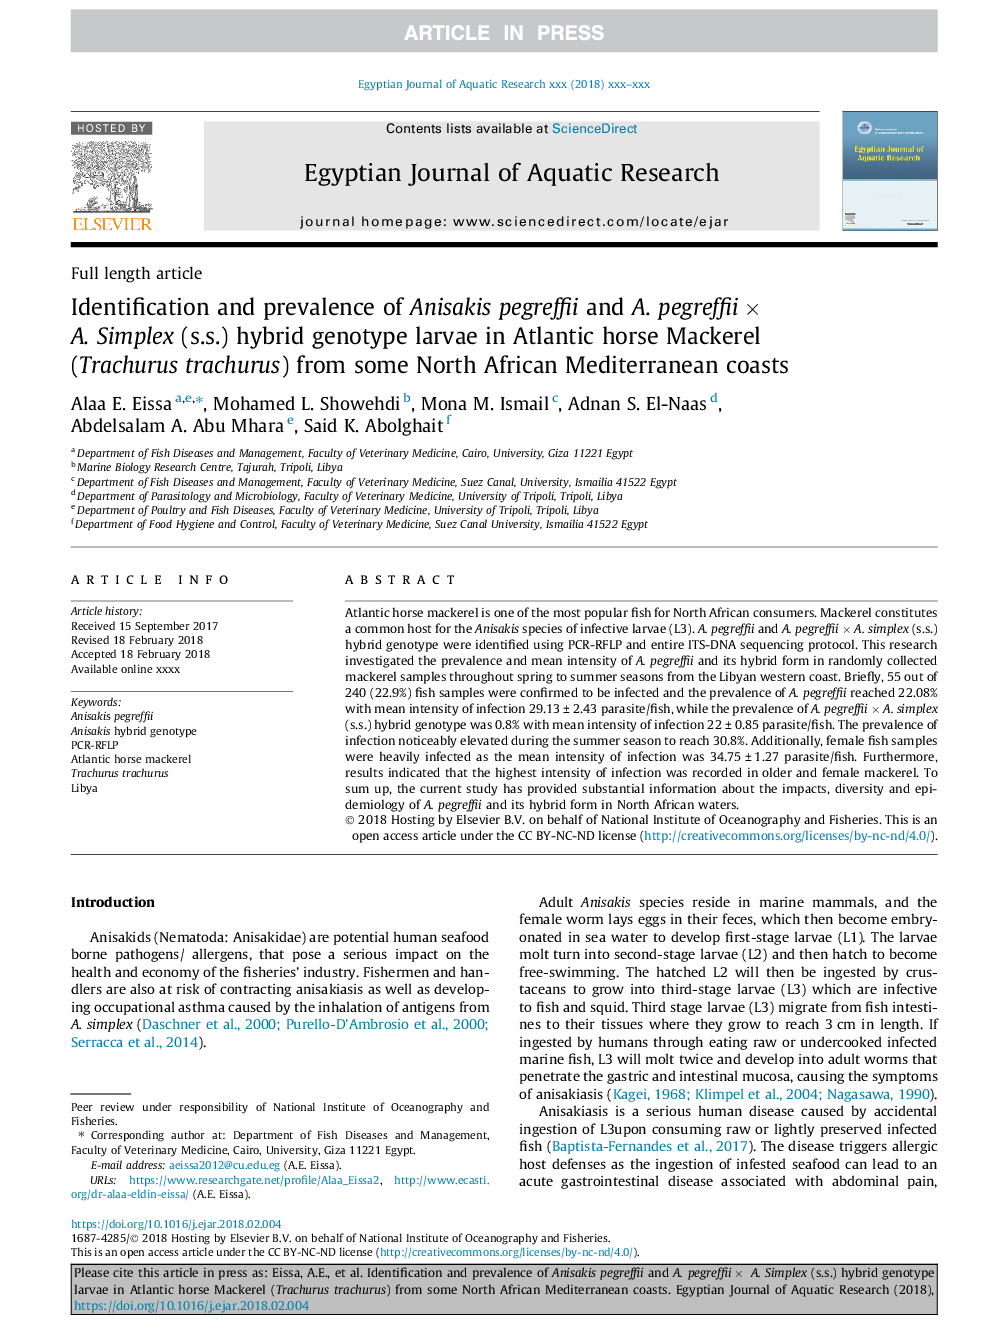 Identification and prevalence of Anisakis pegreffii and A. pegreffiiâ¯Ãâ¯A. Simplex (s.s.) hybrid genotype larvae in Atlantic horse Mackerel (Trachurus trachurus) from some North African Mediterranean coasts